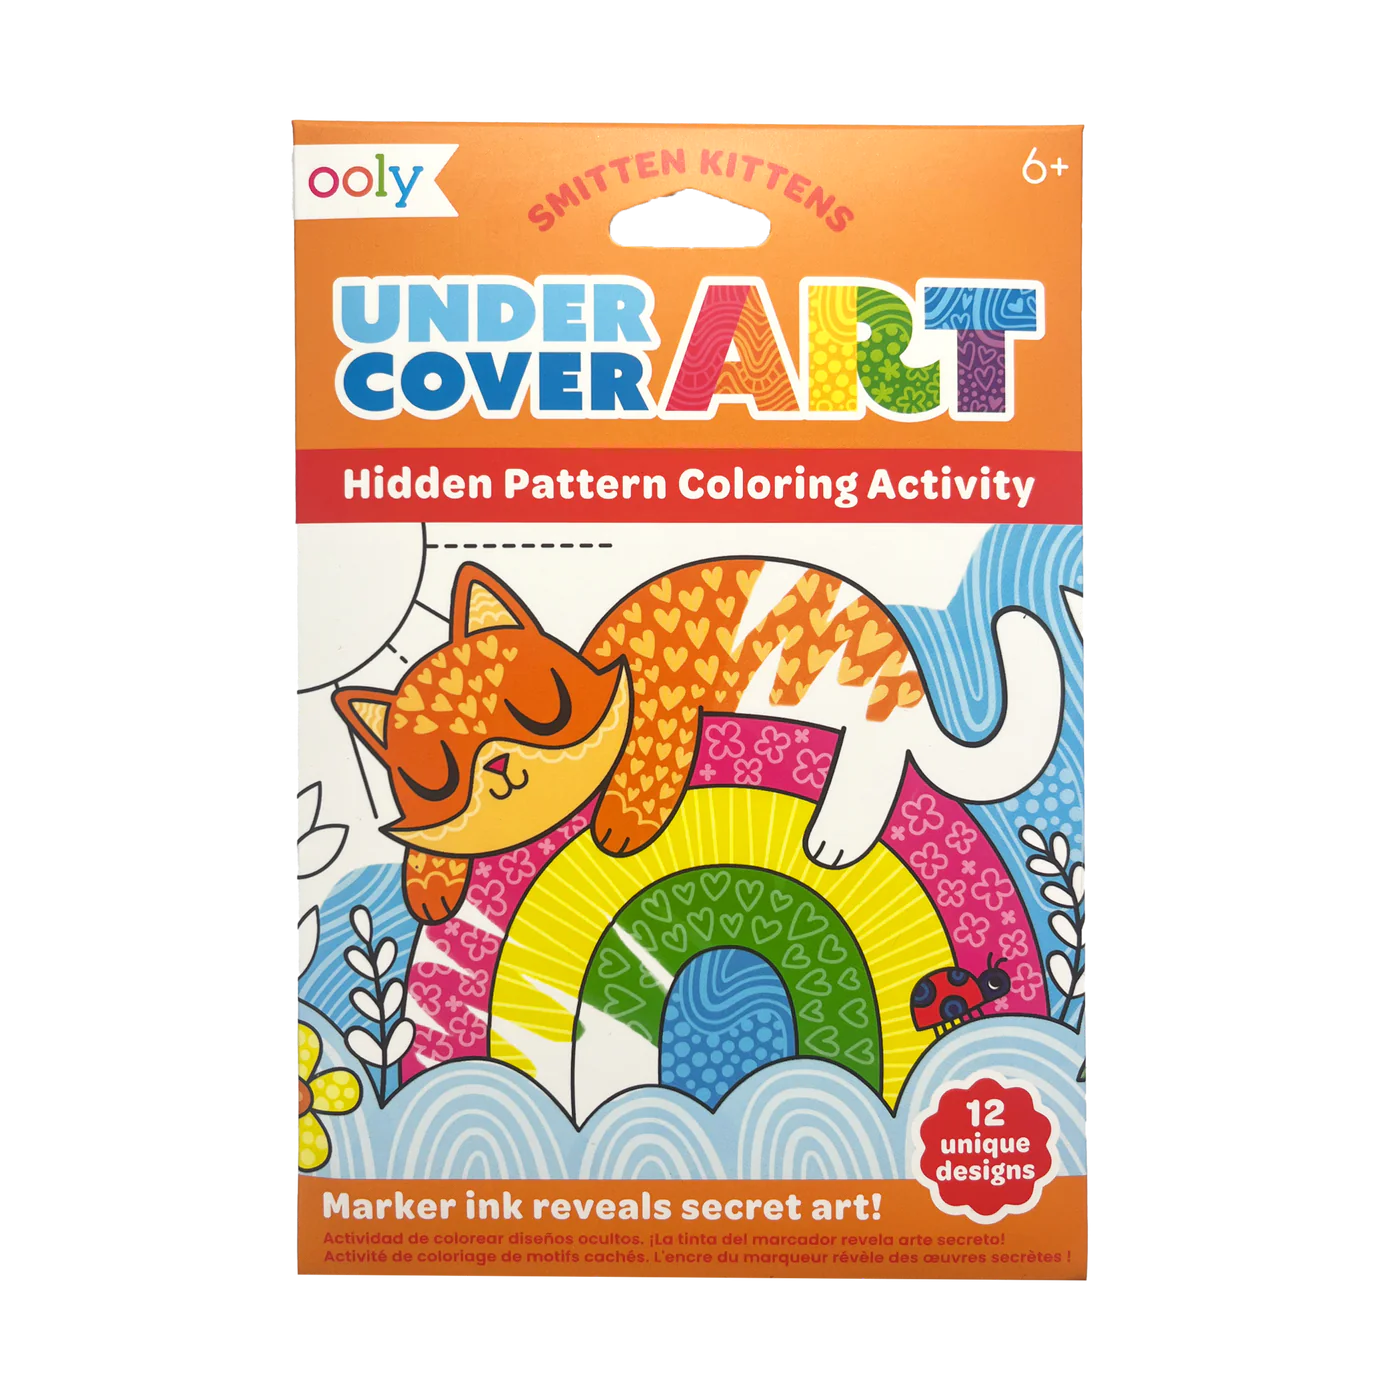 Ooly Undercover Art Hidden Pattern Coloring Activity Art Cards - Smitten Kittens-OOLY-Little Giant Kidz